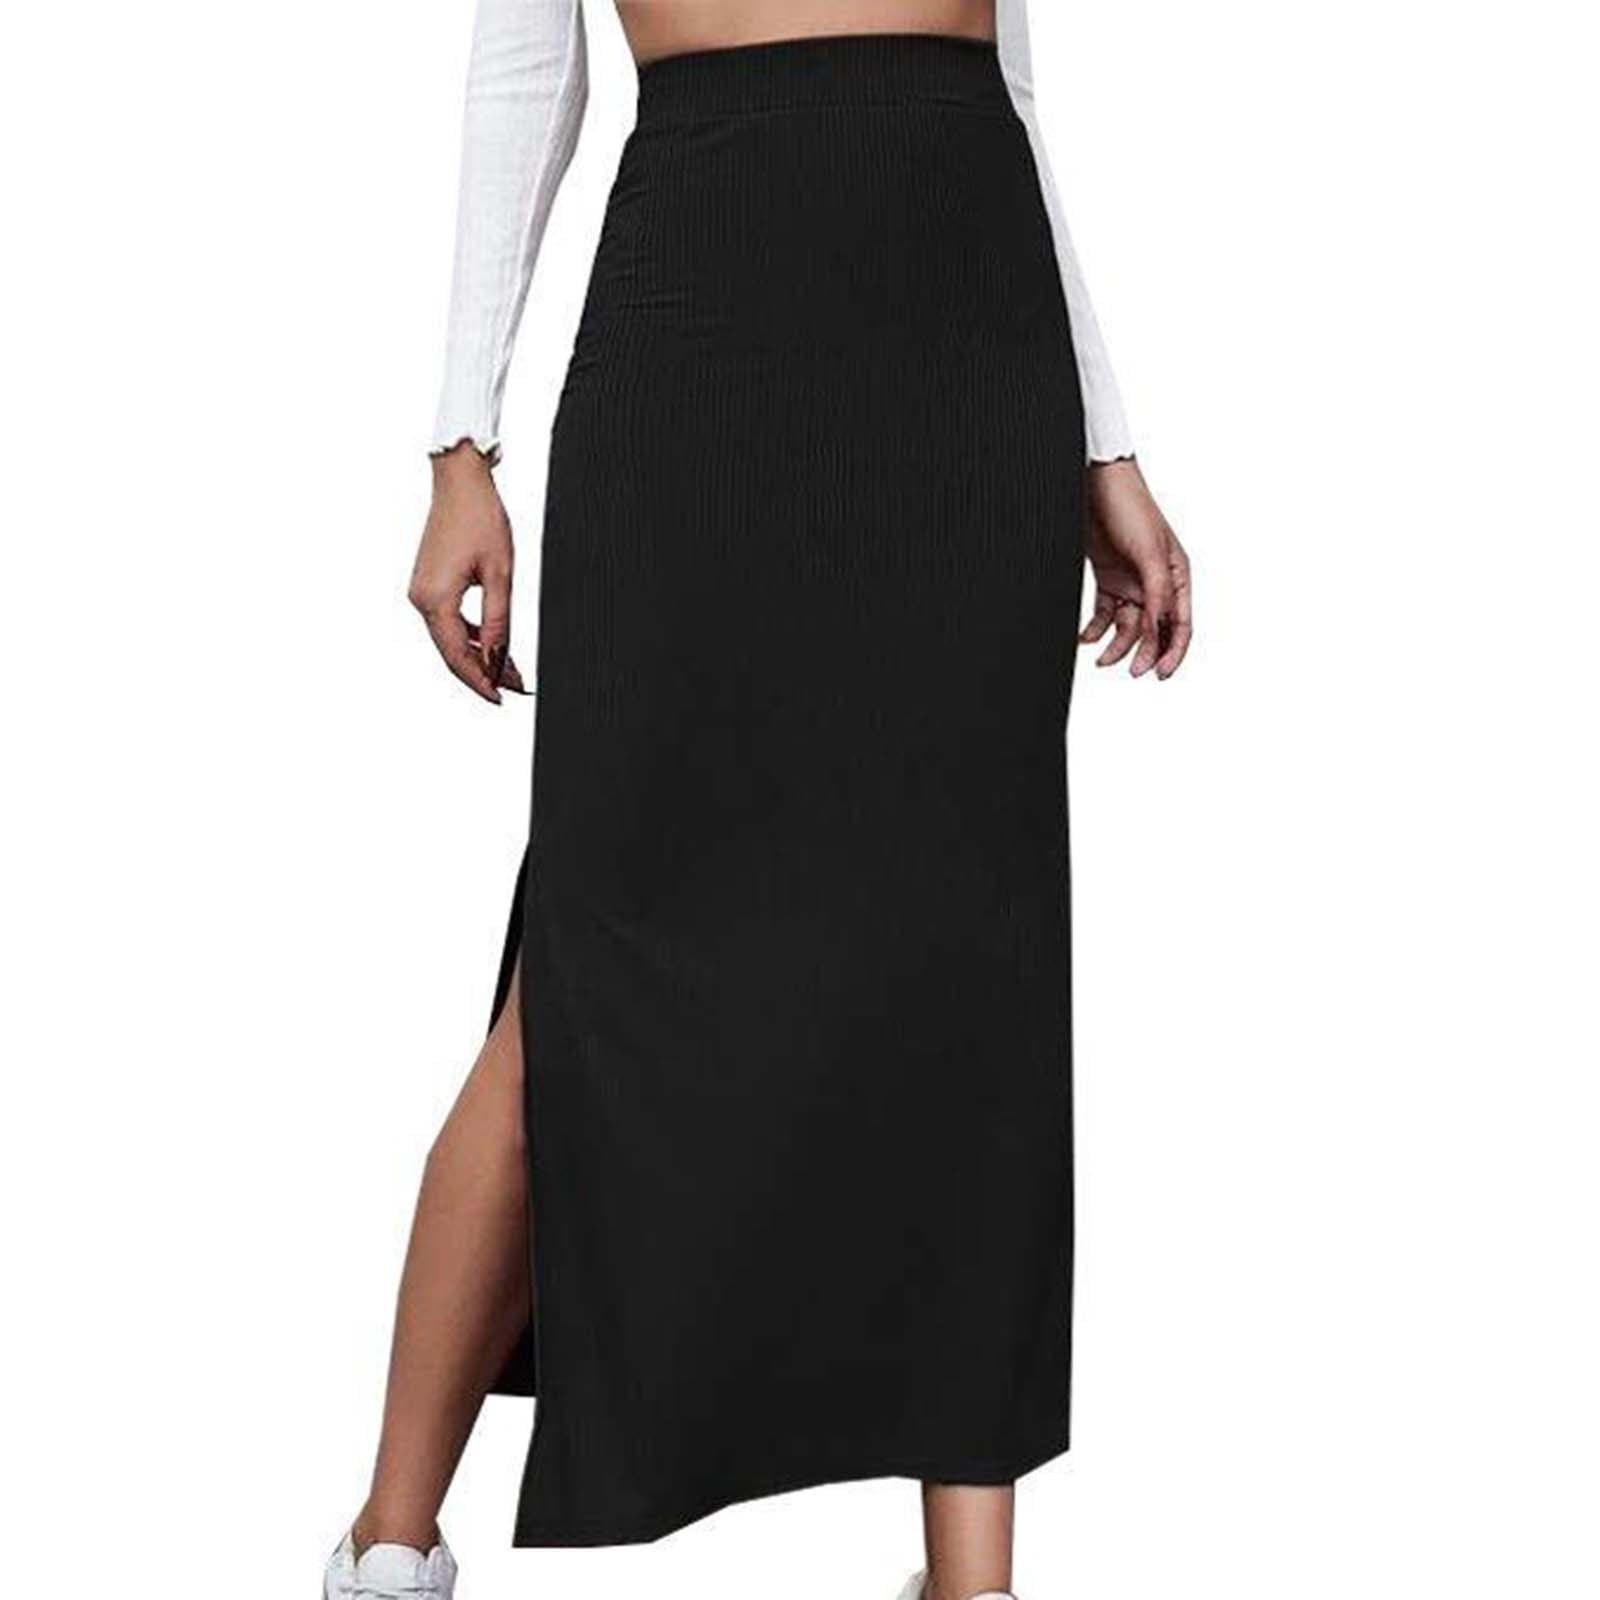 Fashion Women Long Solid Black Pencil Skirt Winter Sexy Elastic